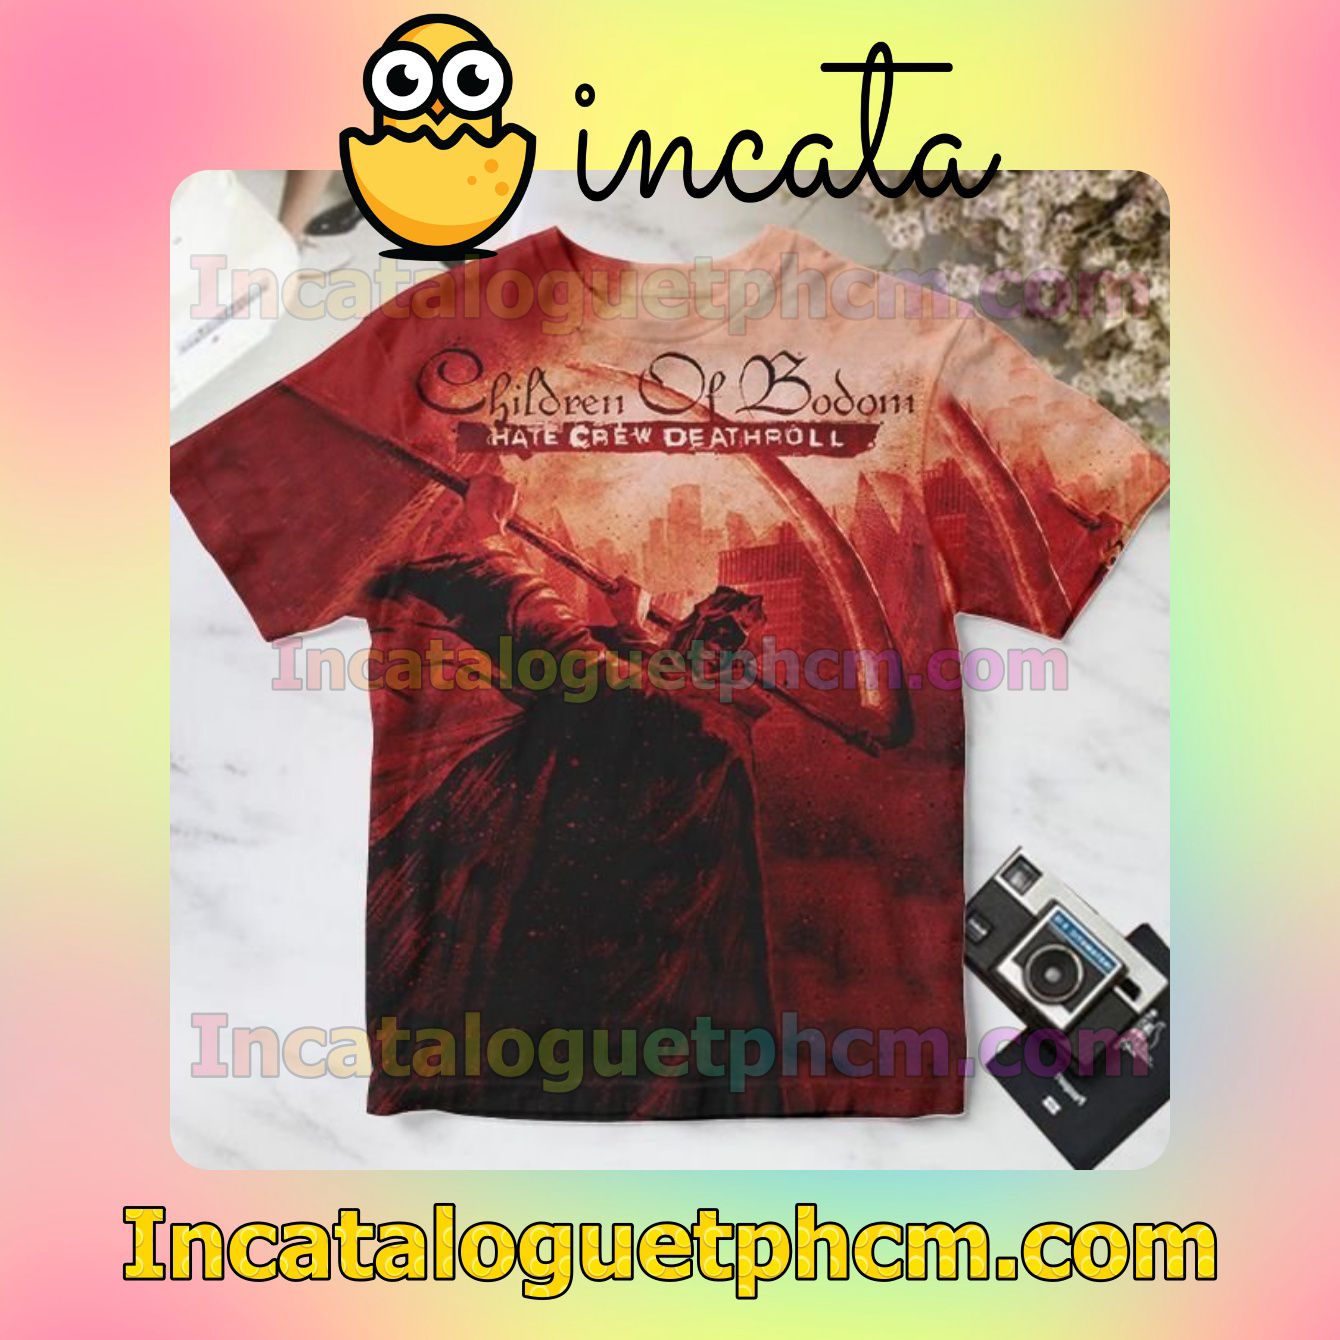 Children Of Bodom Hate Crew Deathroll Album Cover Personalized Shirt